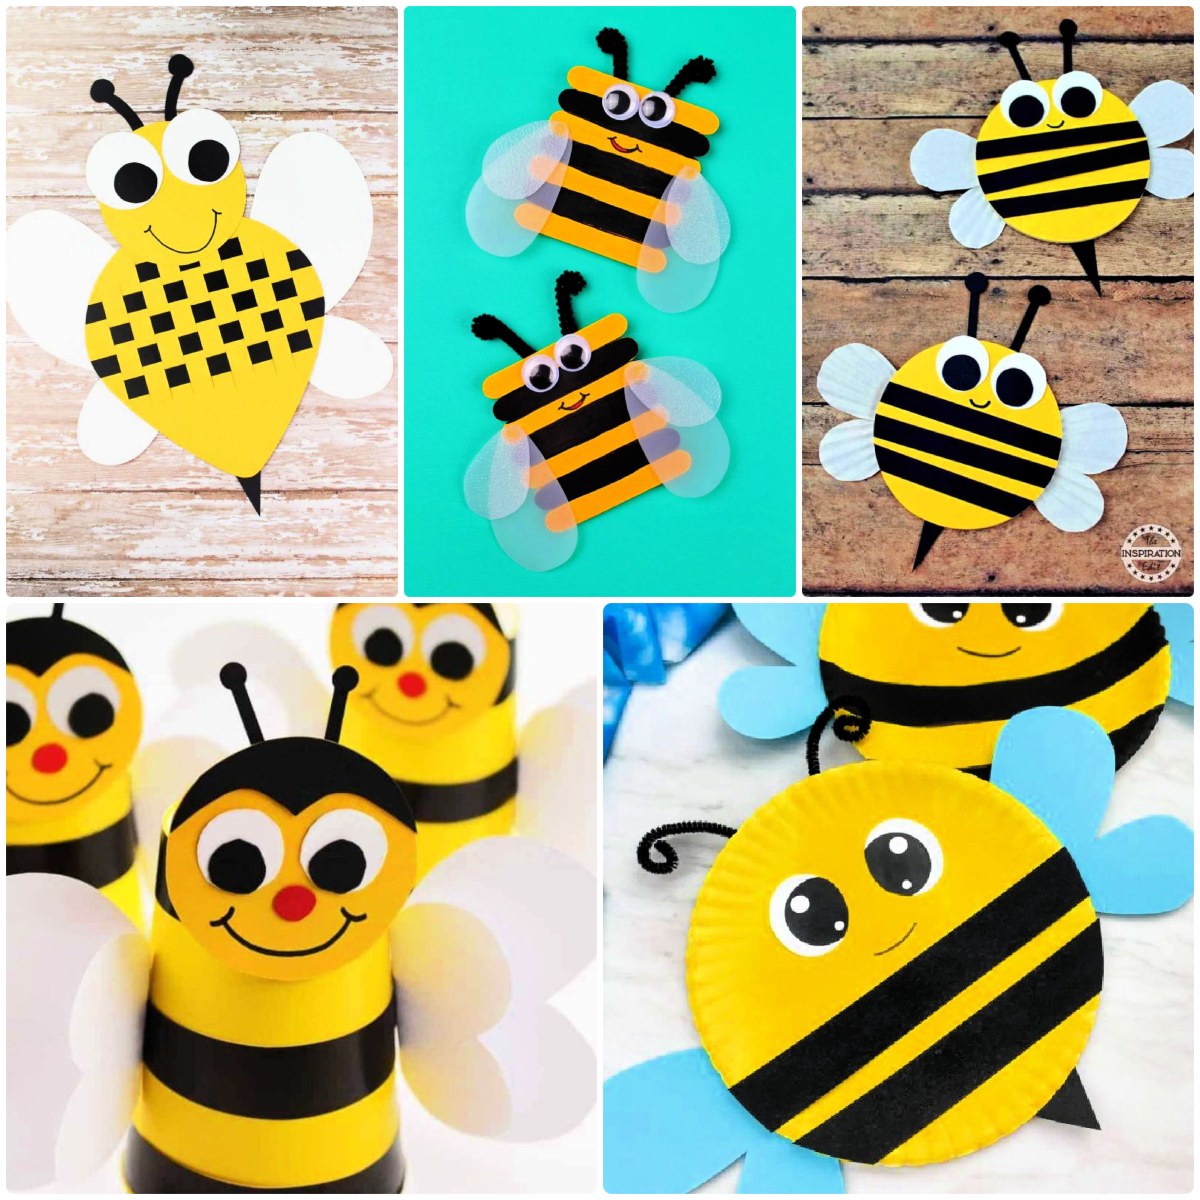 https://craftulate.com/wp-content/uploads/2023/01/Bee-Crafts-for-Kids.jpg